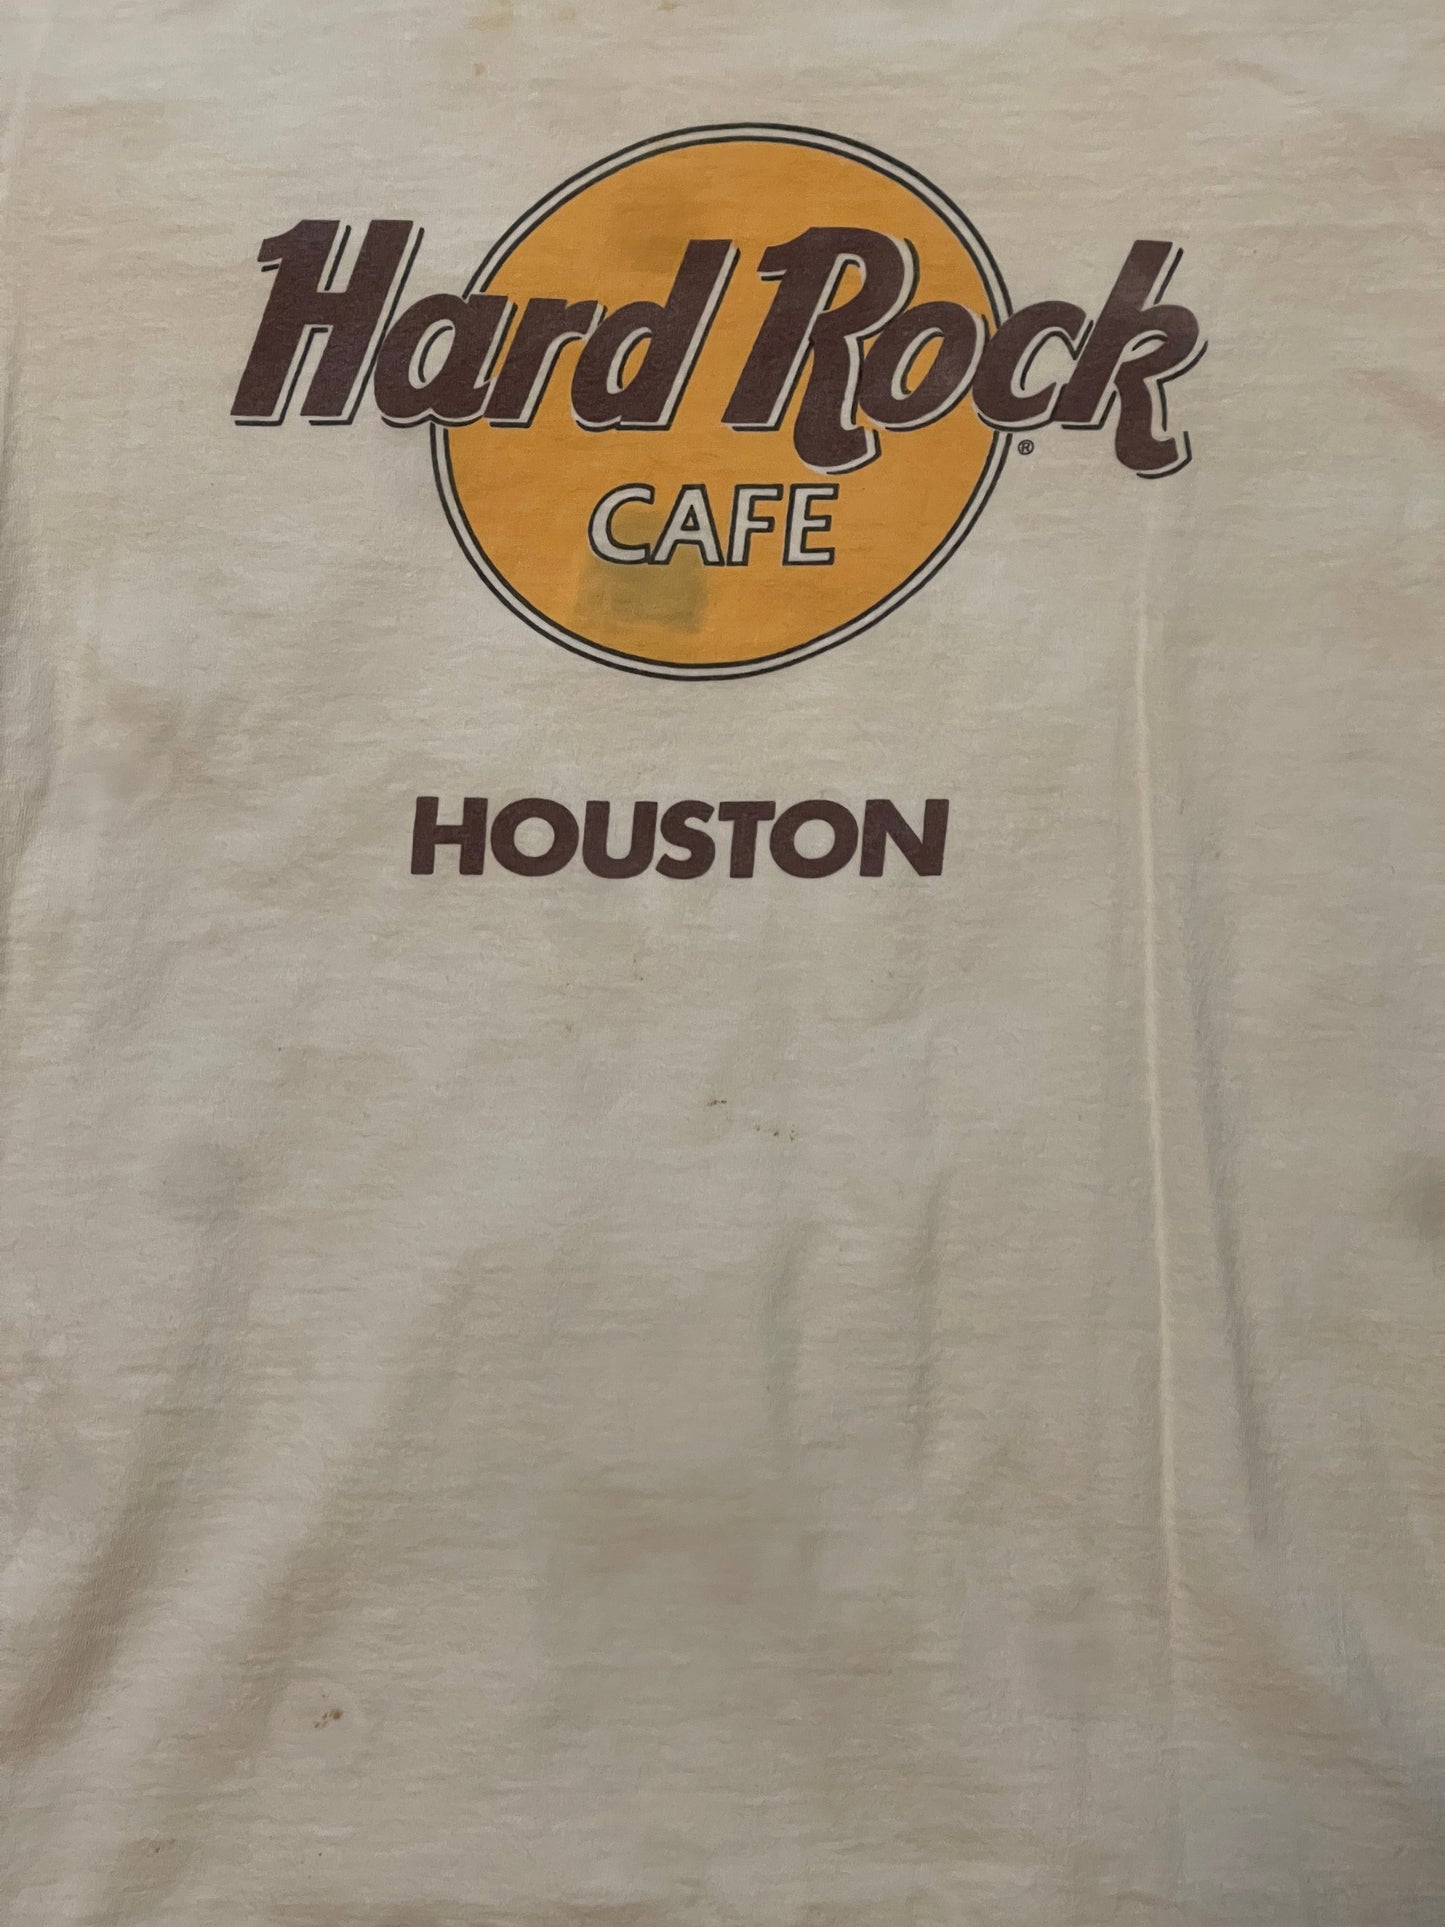 90’s Hard Rock Cafe Houston Tee